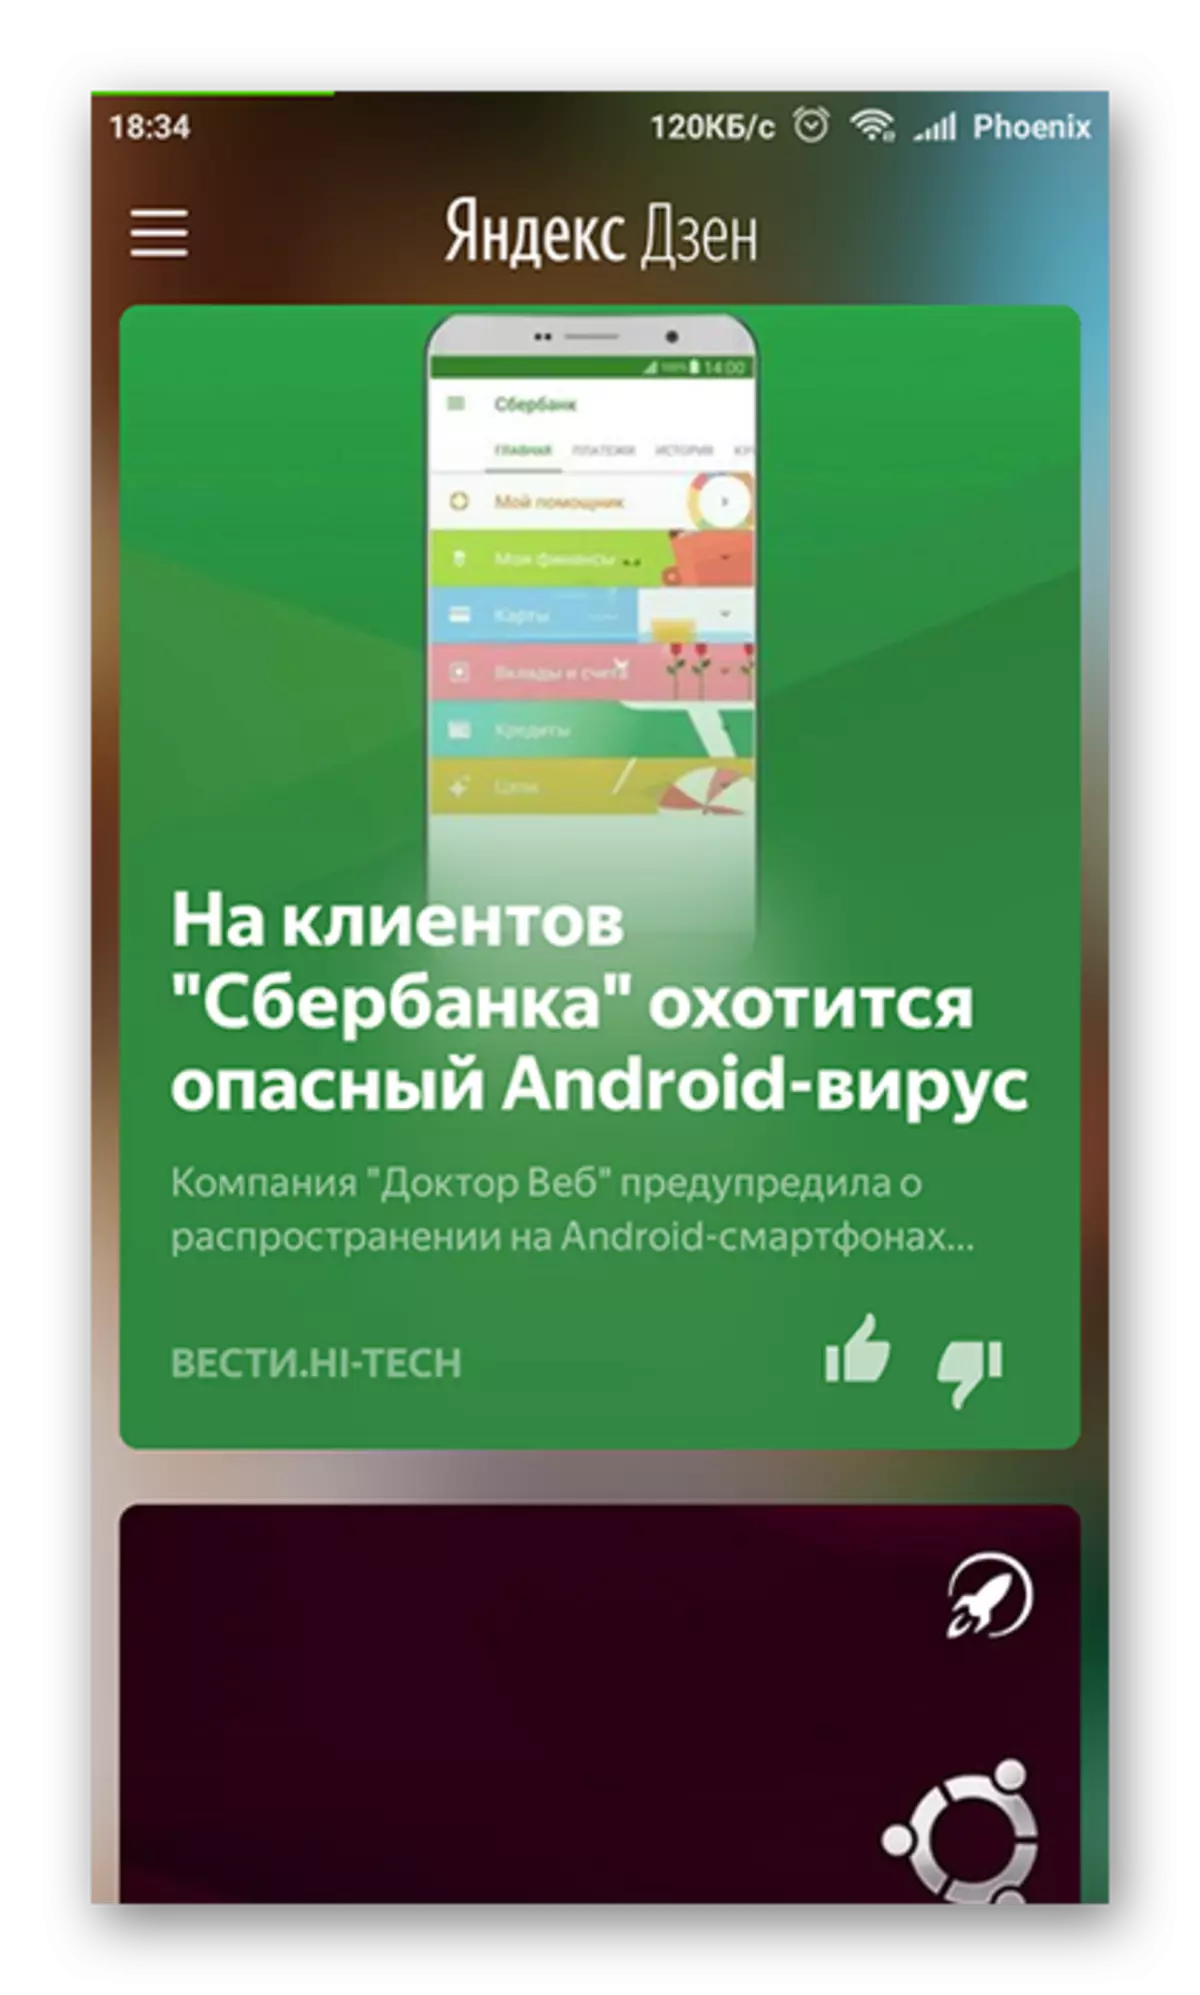 Talobixinta shaqsiyeed Yandex.dzen on Android